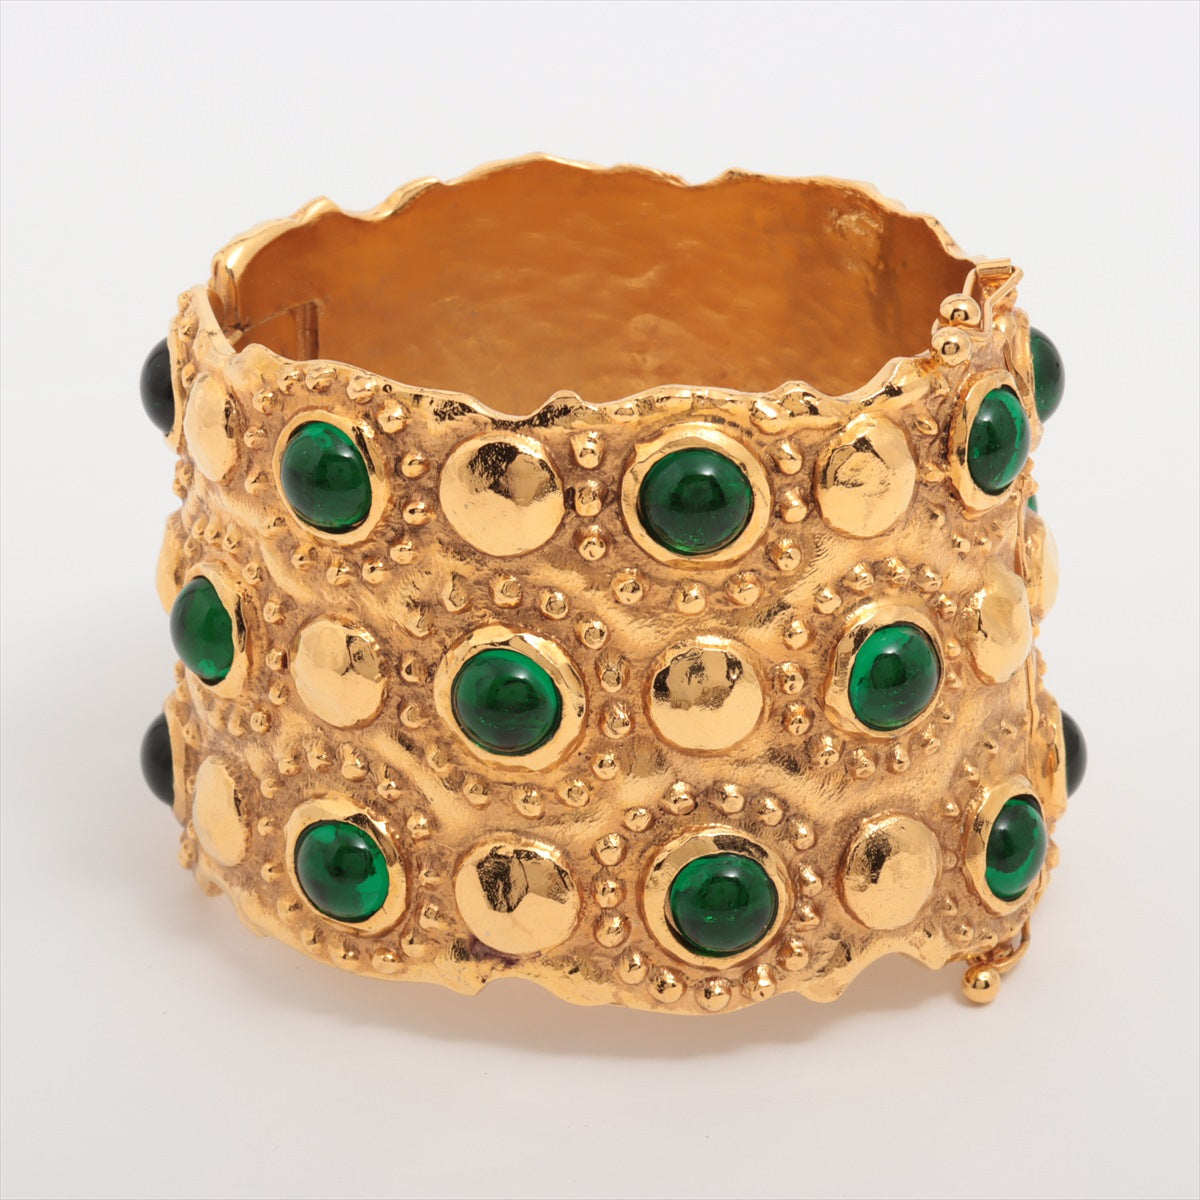 Chanel Gripoix 23 4212 Bracelet GP x color stone Gold x green